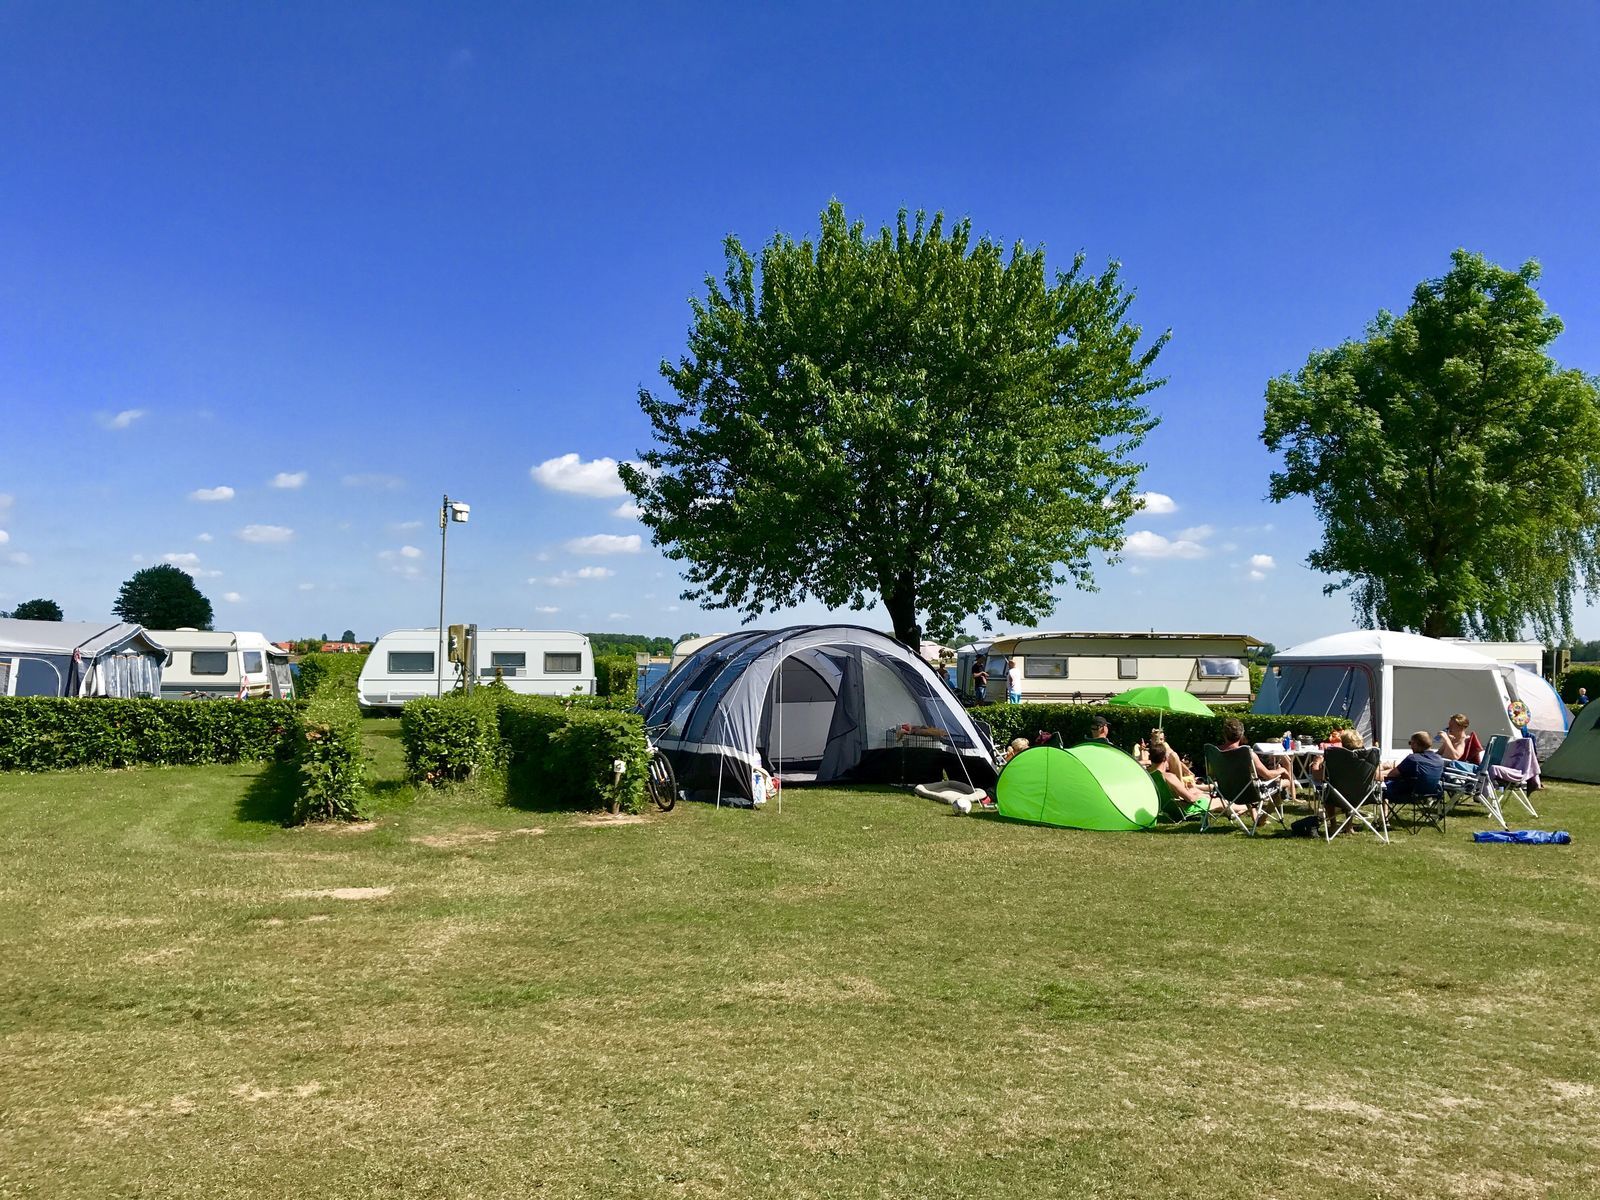 Camping-Stellplatz auf dem saisonalen Feld am inneren Ring